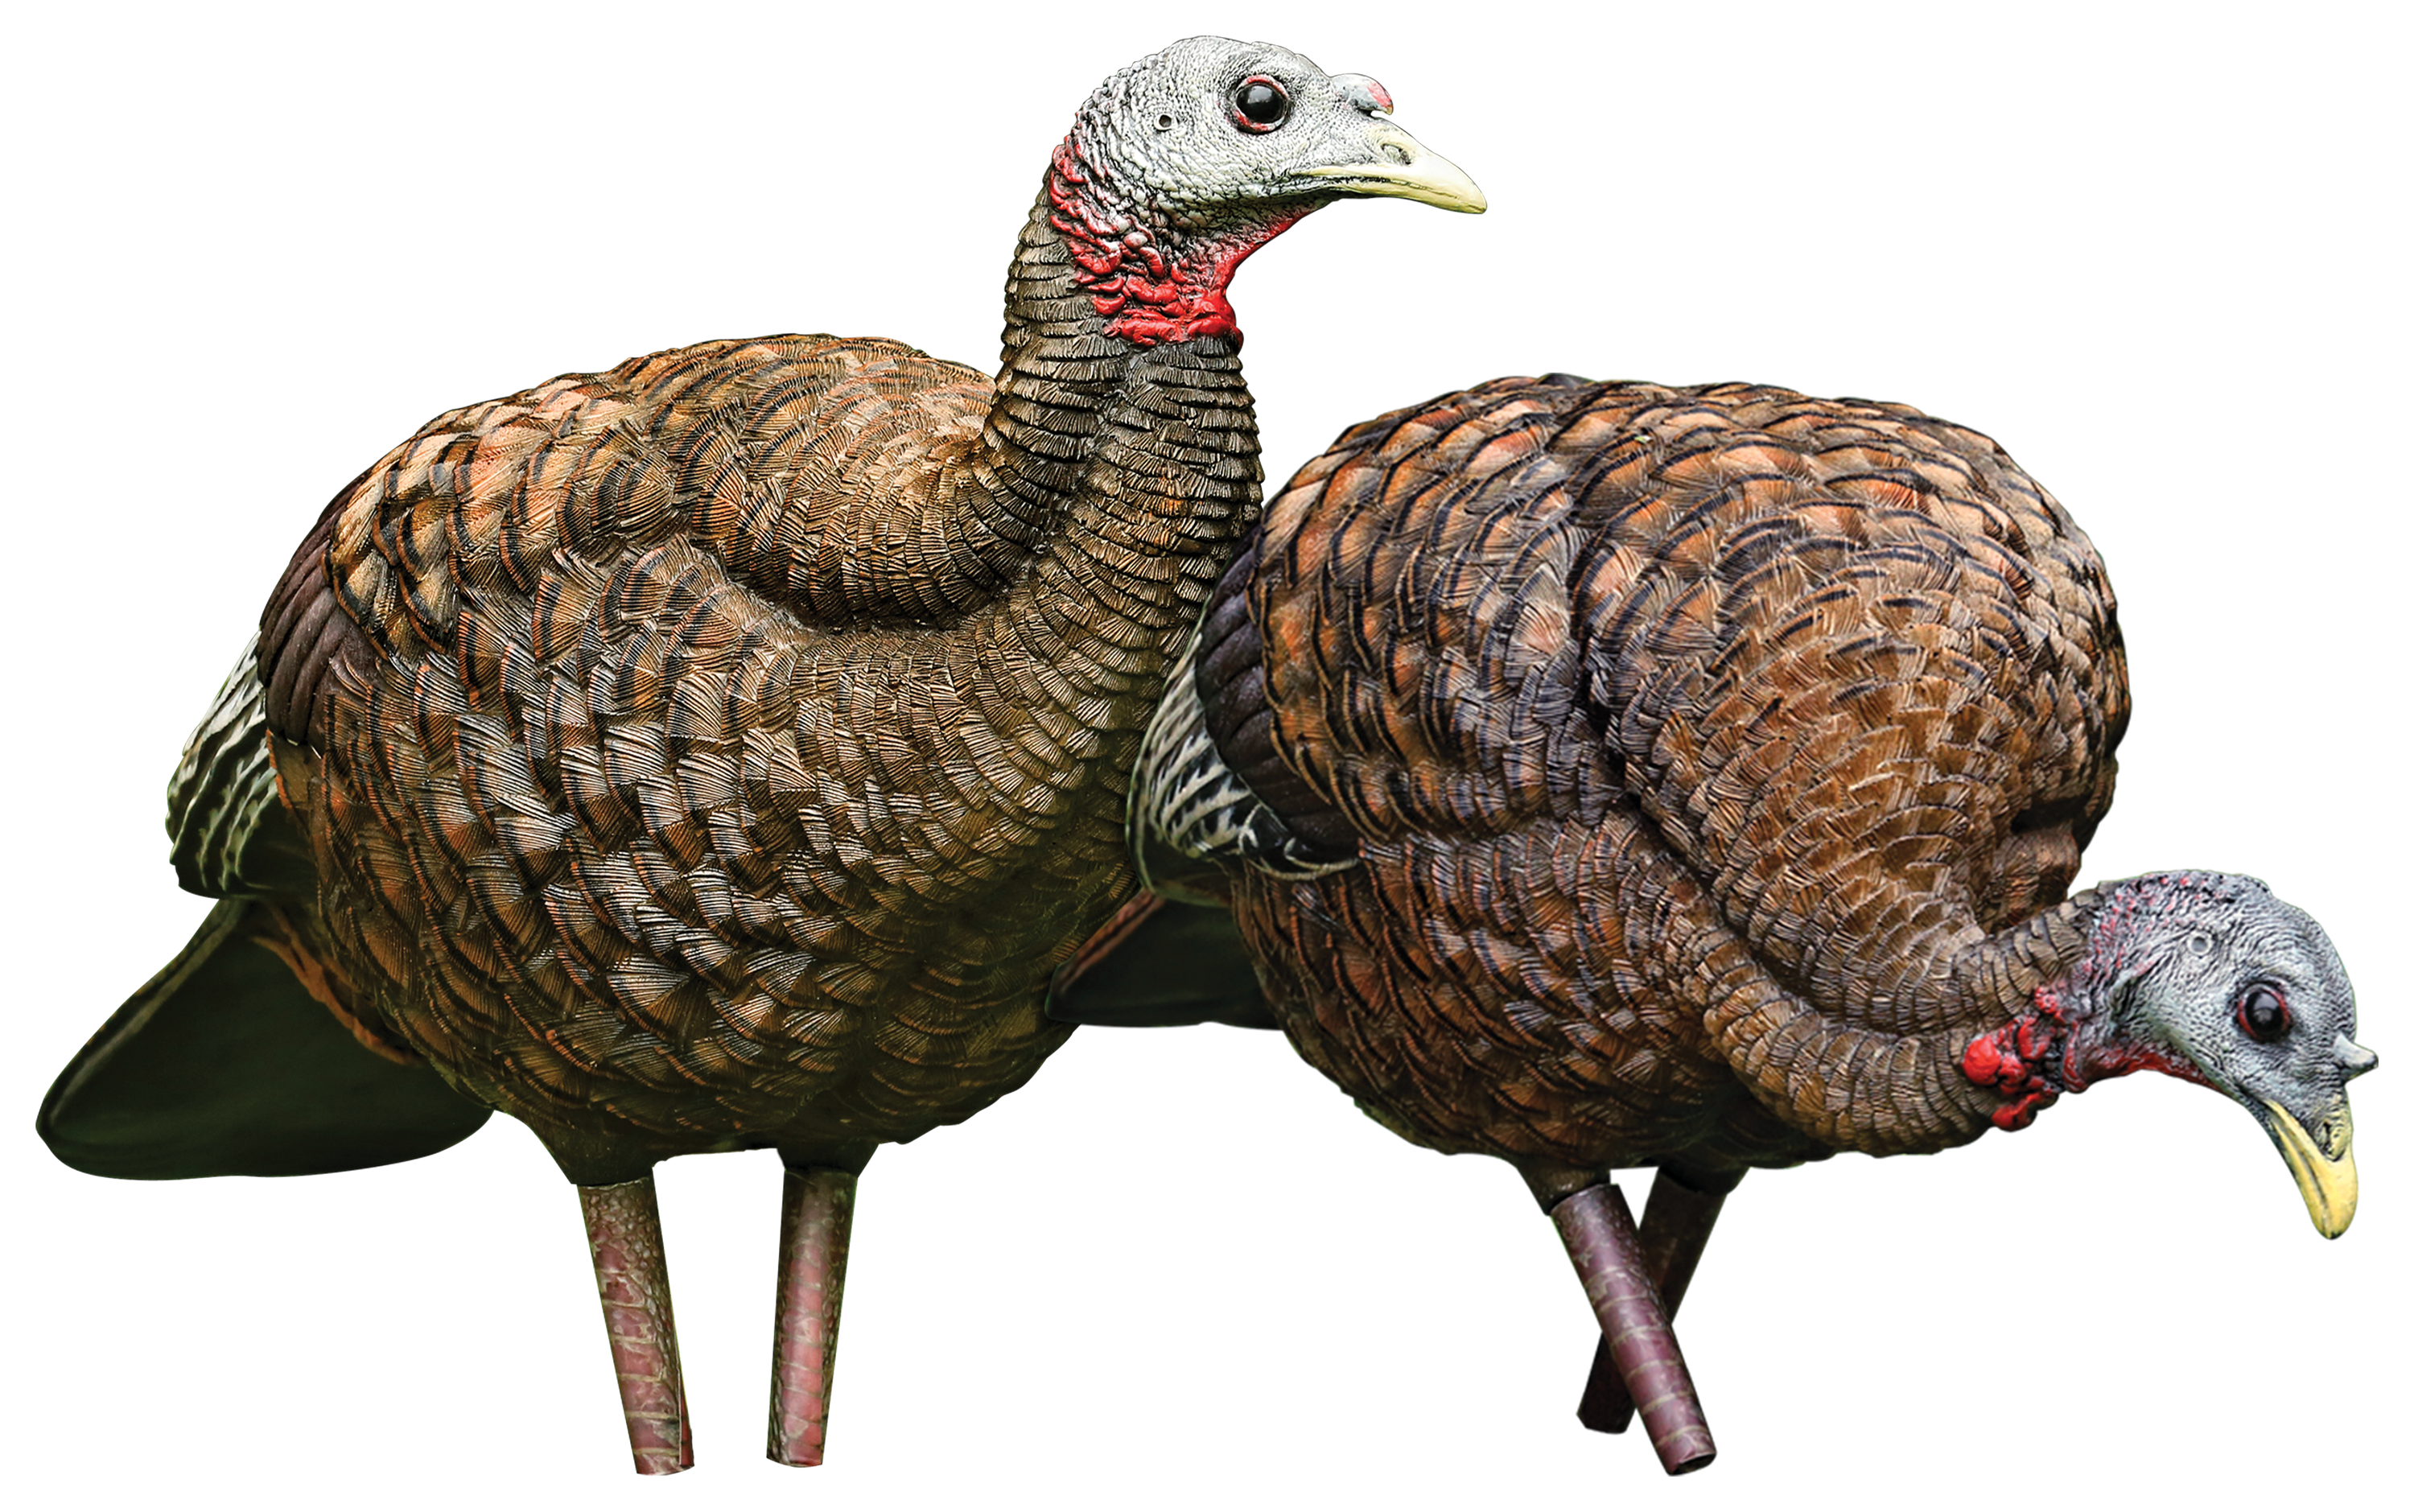 Avian-X Pair of Ladies LCD Breeder/Feeder Hen Turkey Decoy Combo